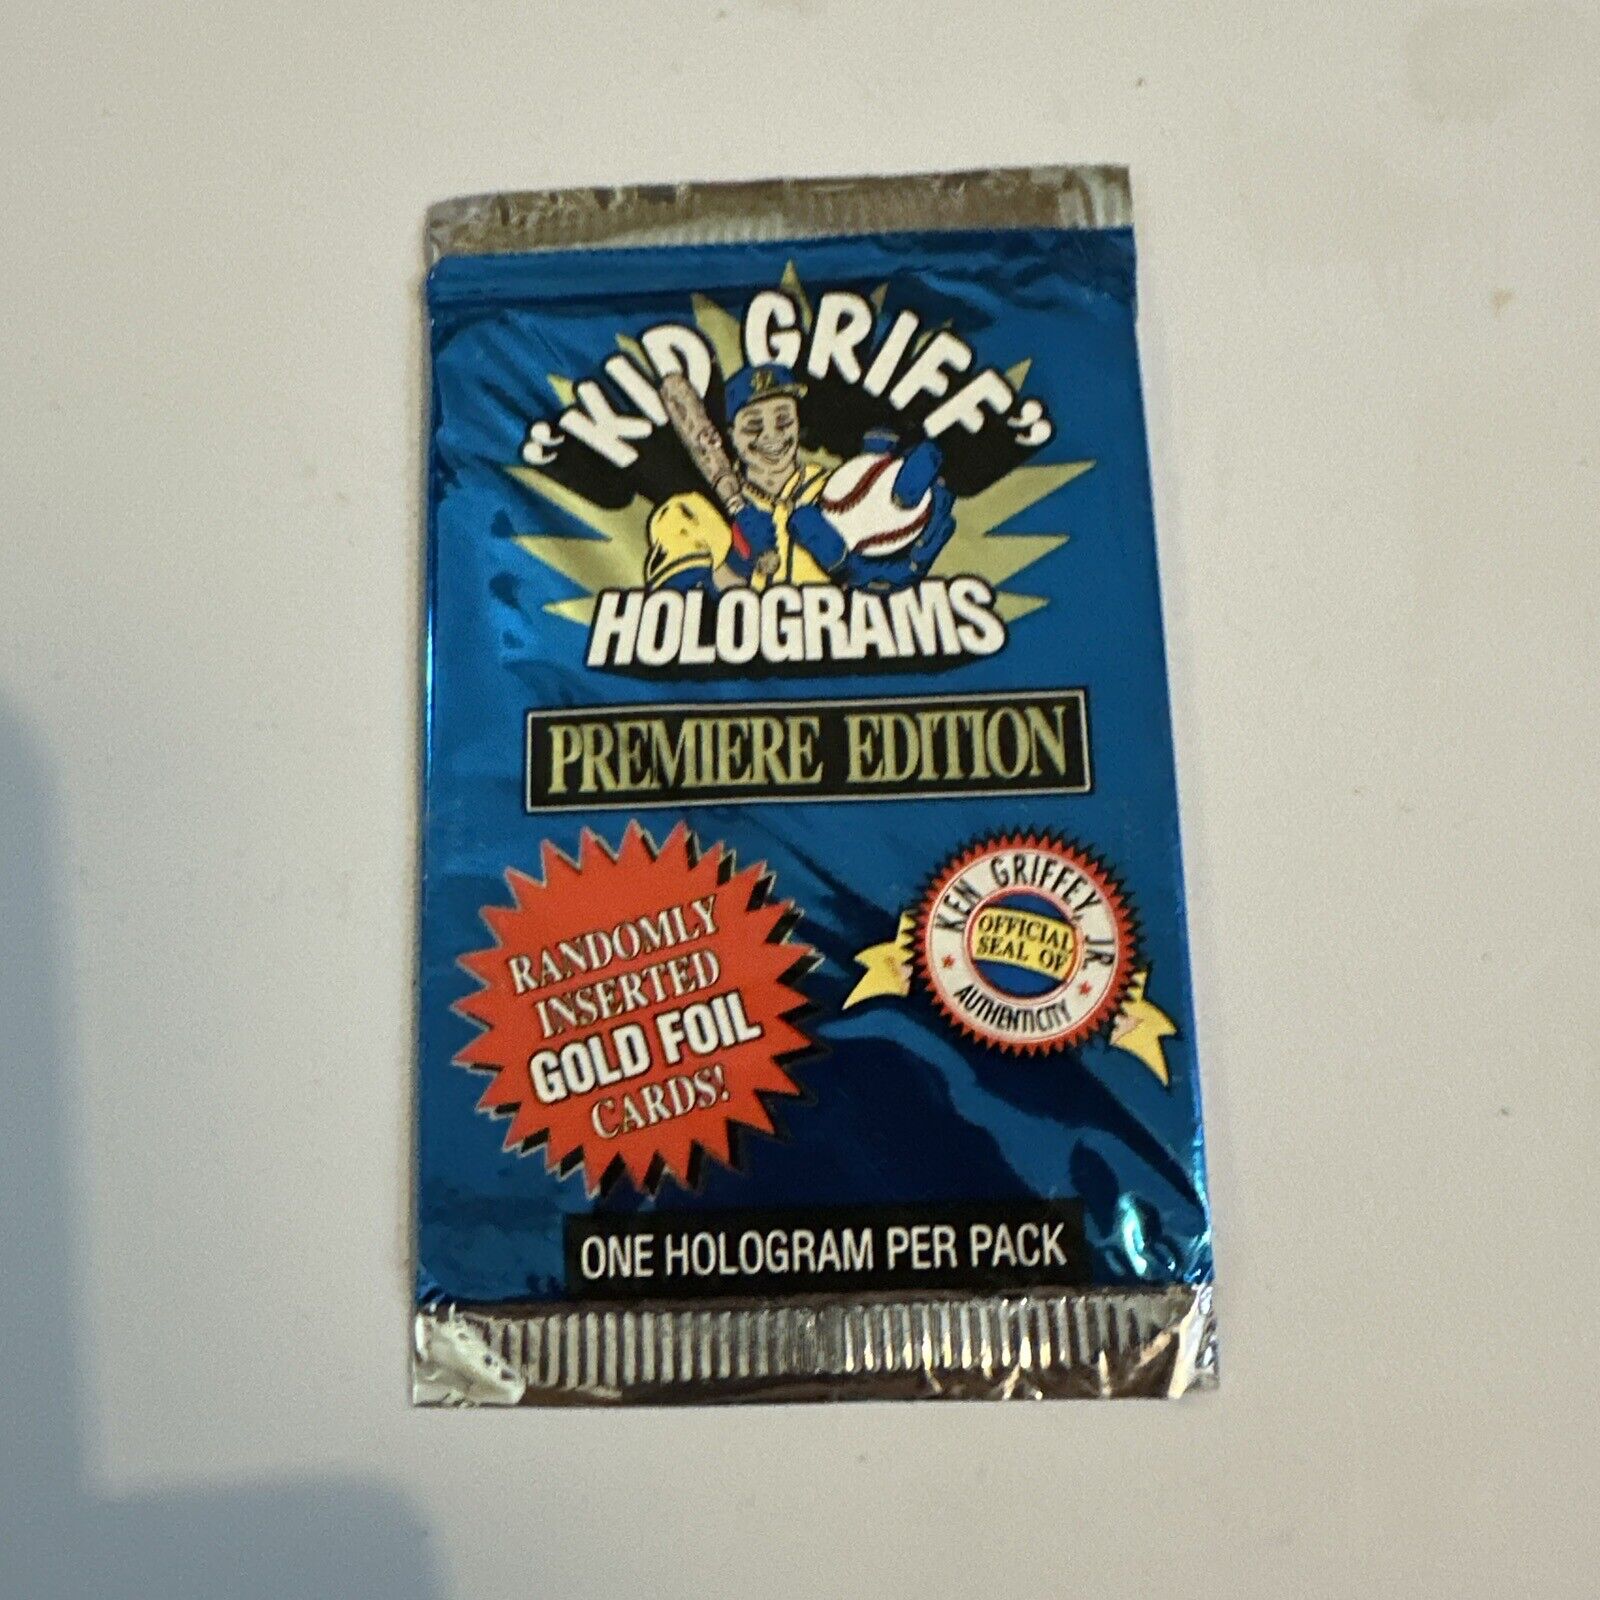 1992 Ken Griffey Jr “Kid Griff” Holograms Premier Edition Un-Opened New Pack